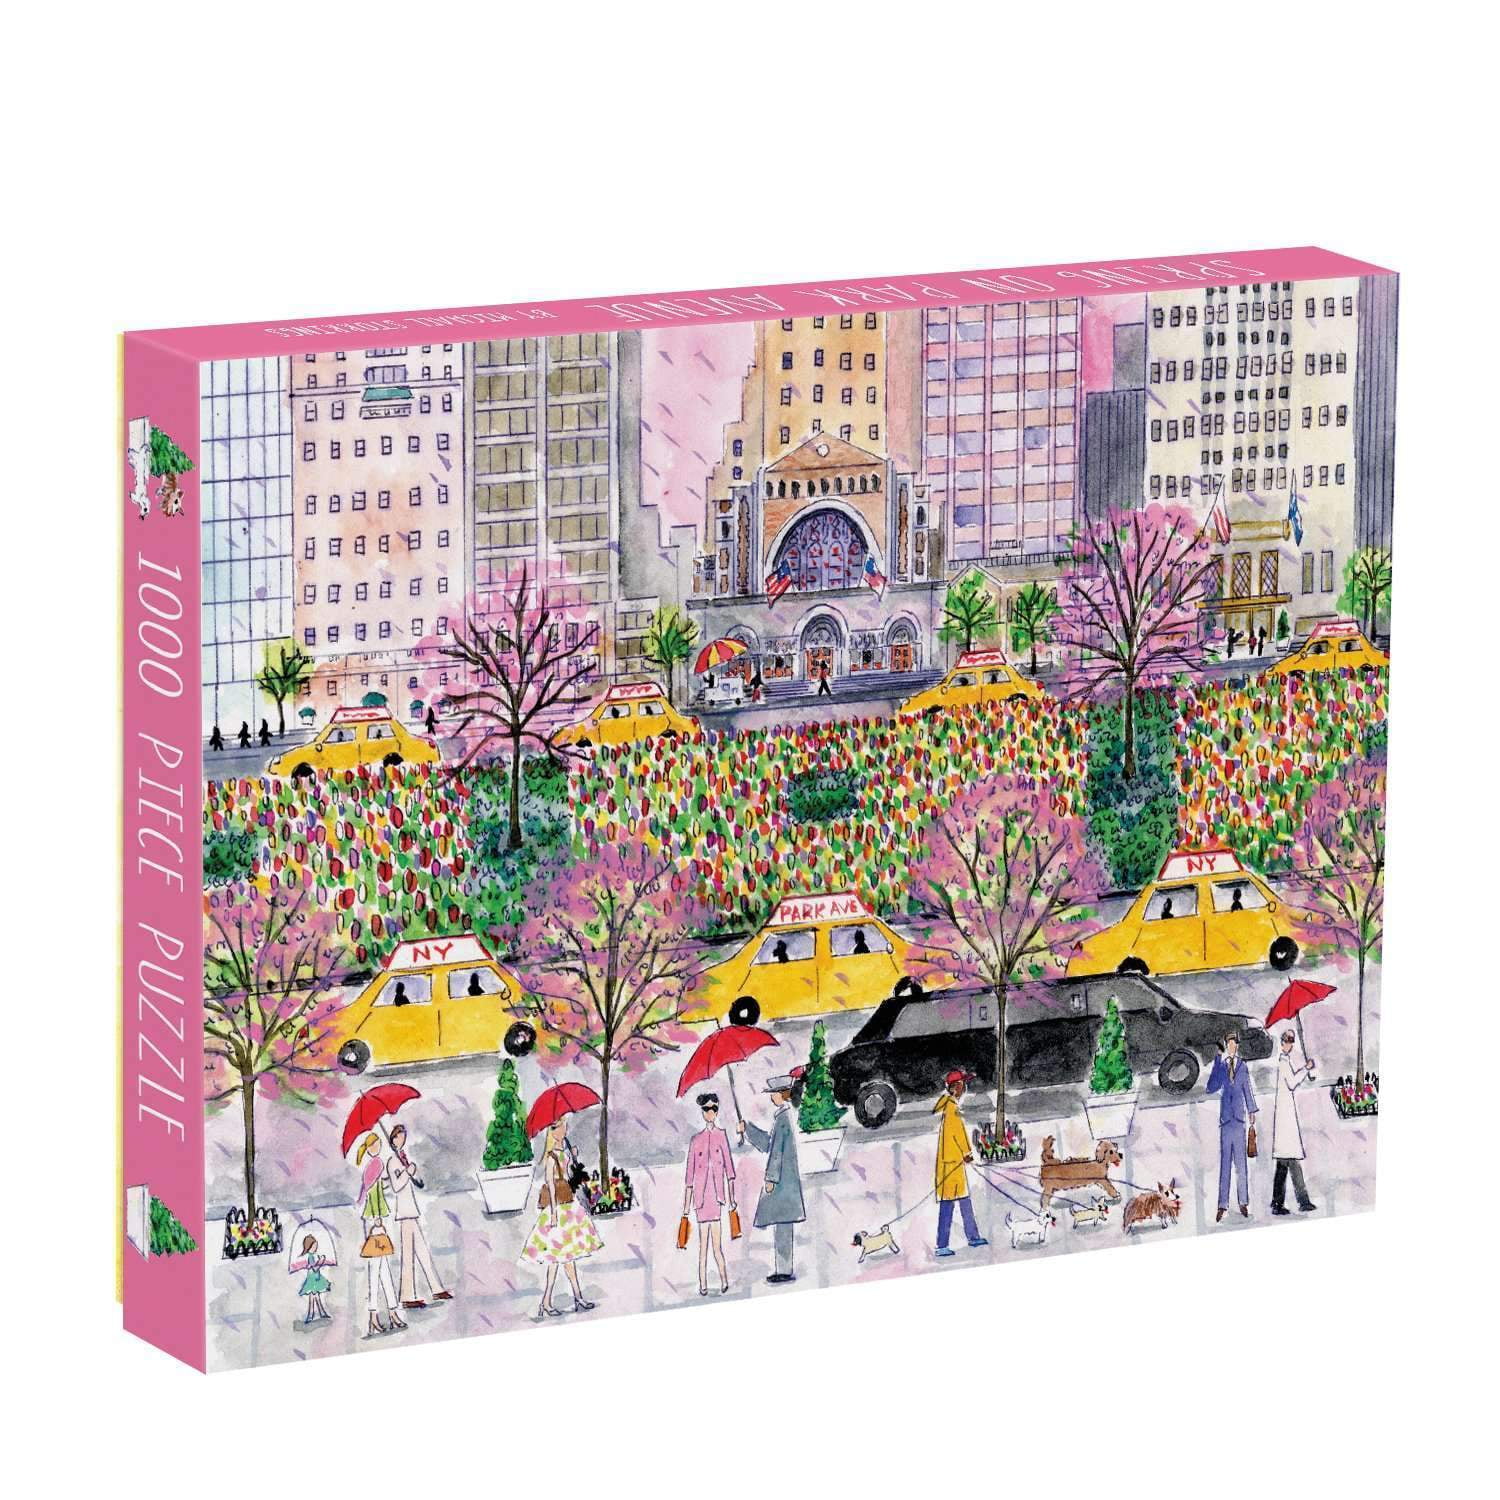 NEW Galison Paris by Michael Storrings 1000 piece jigsaw puzzle 